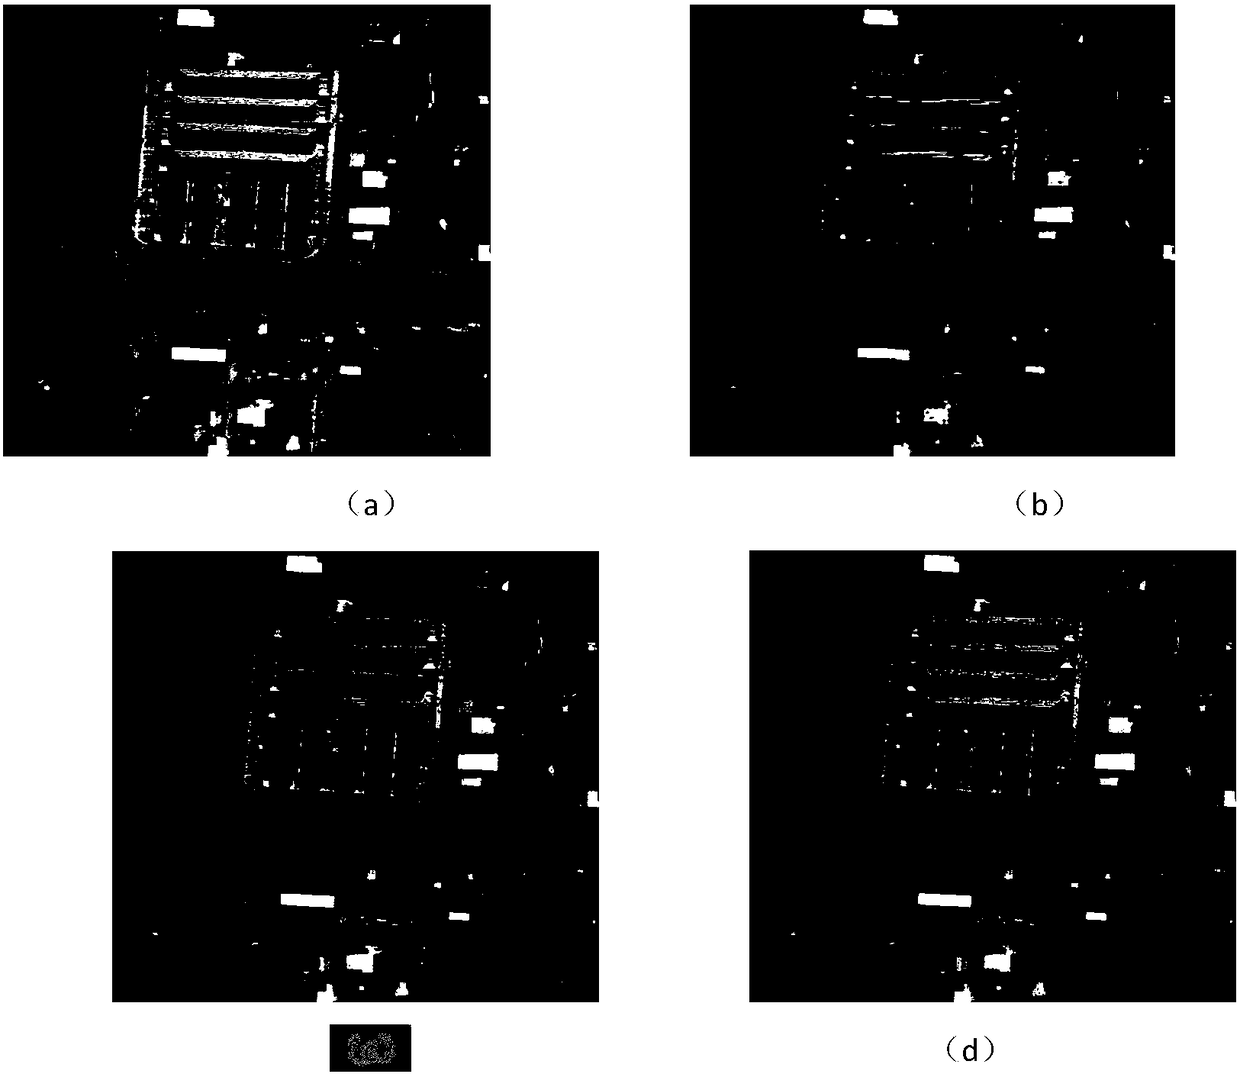 Remote sensing image panchromatic sharpening method based on generative adversarial networks